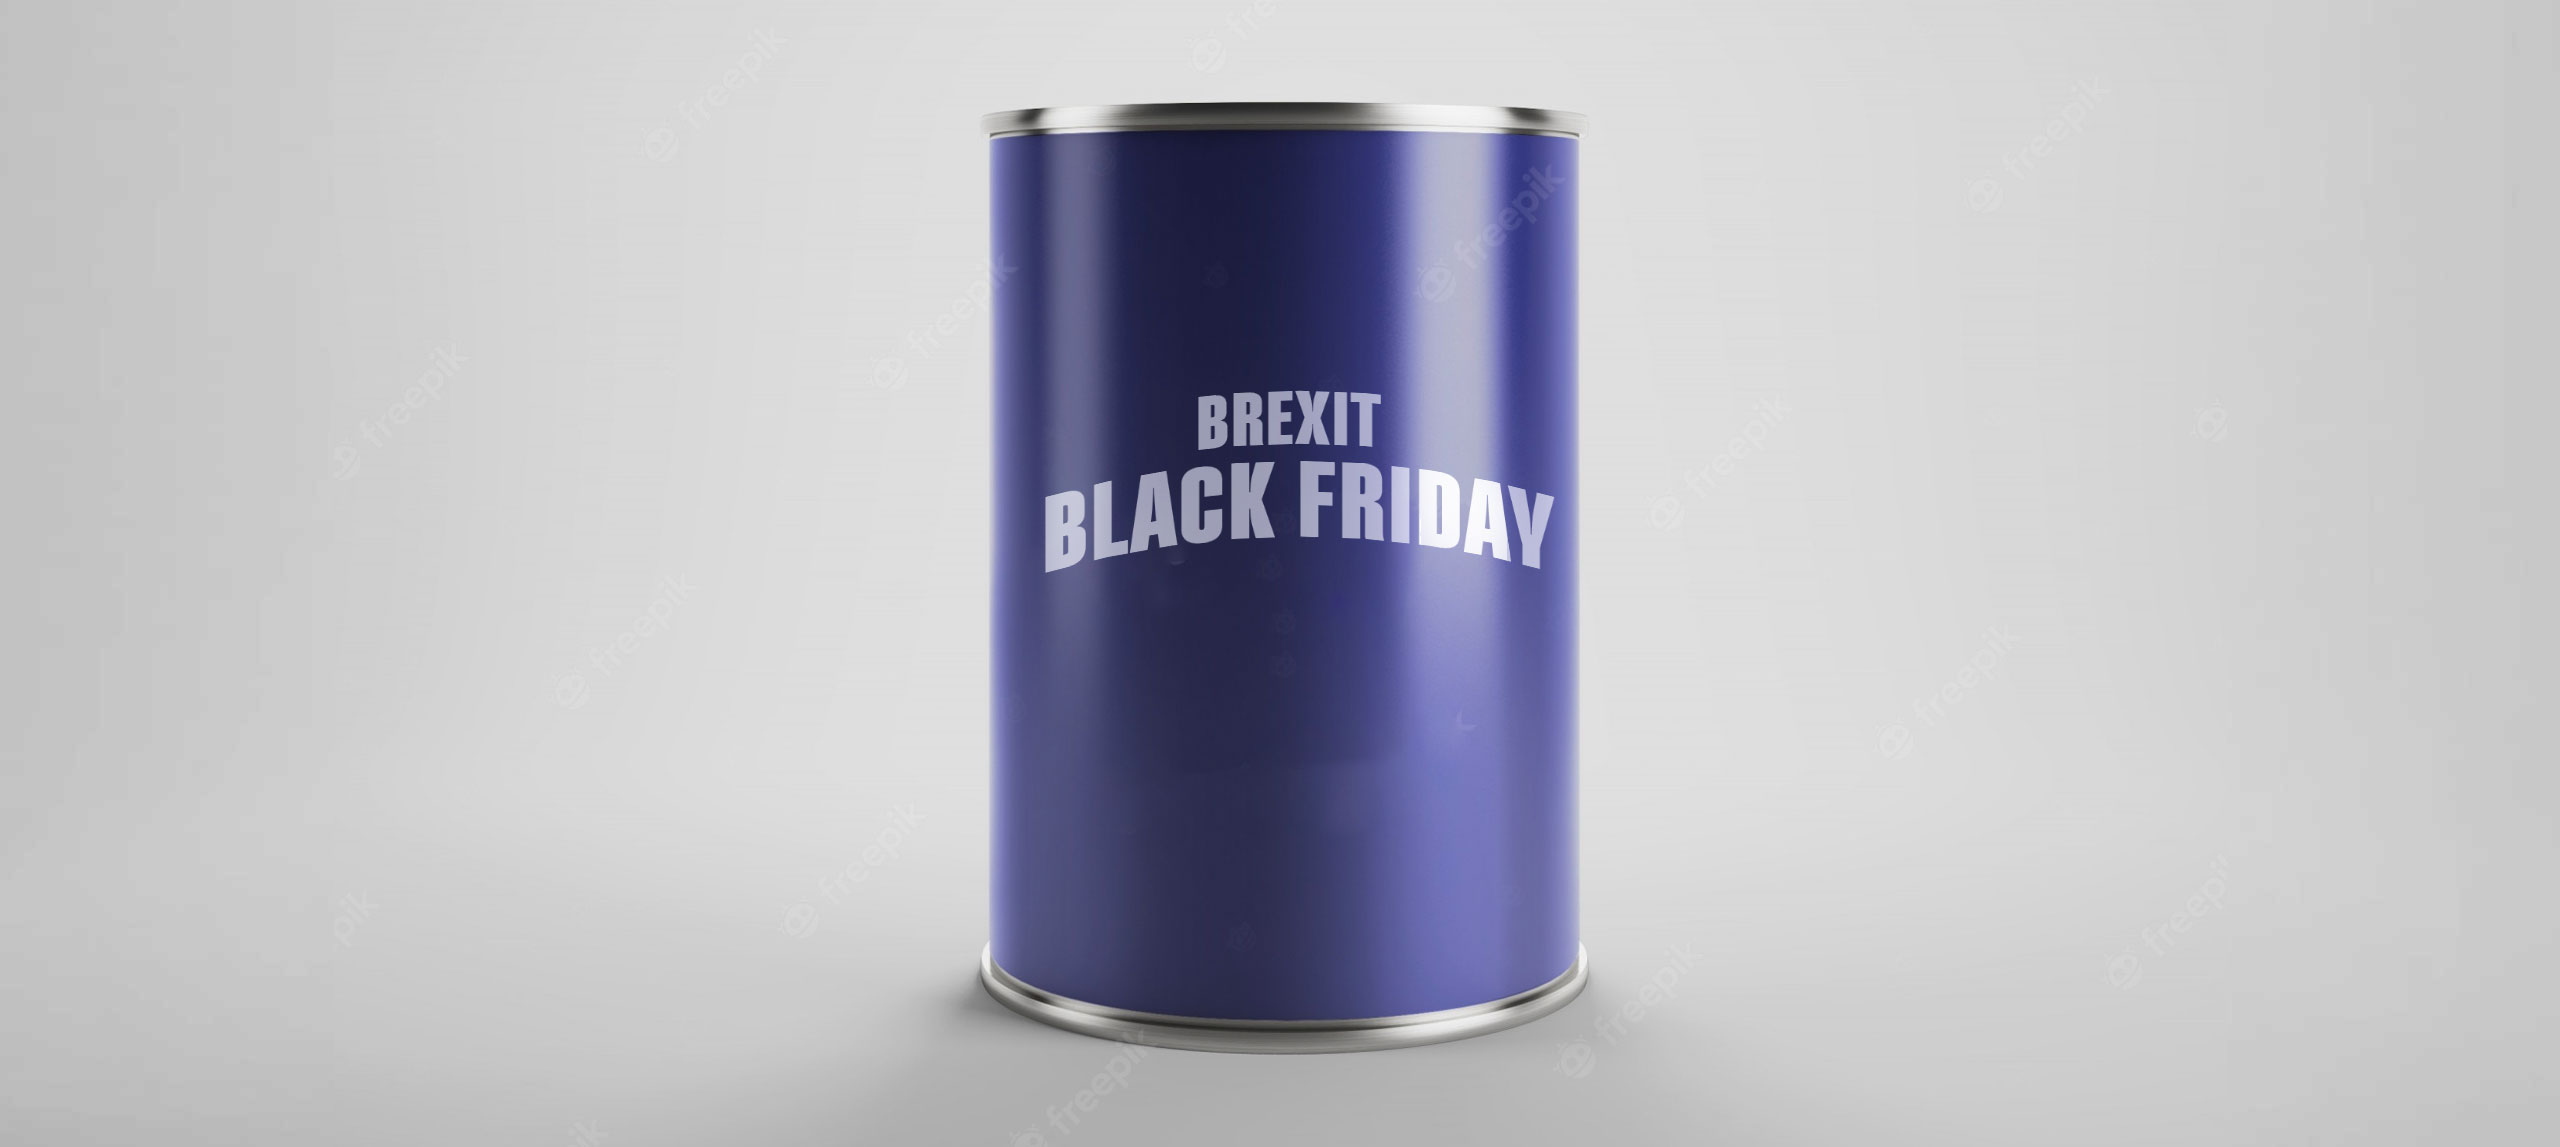 Brexit Black Friday